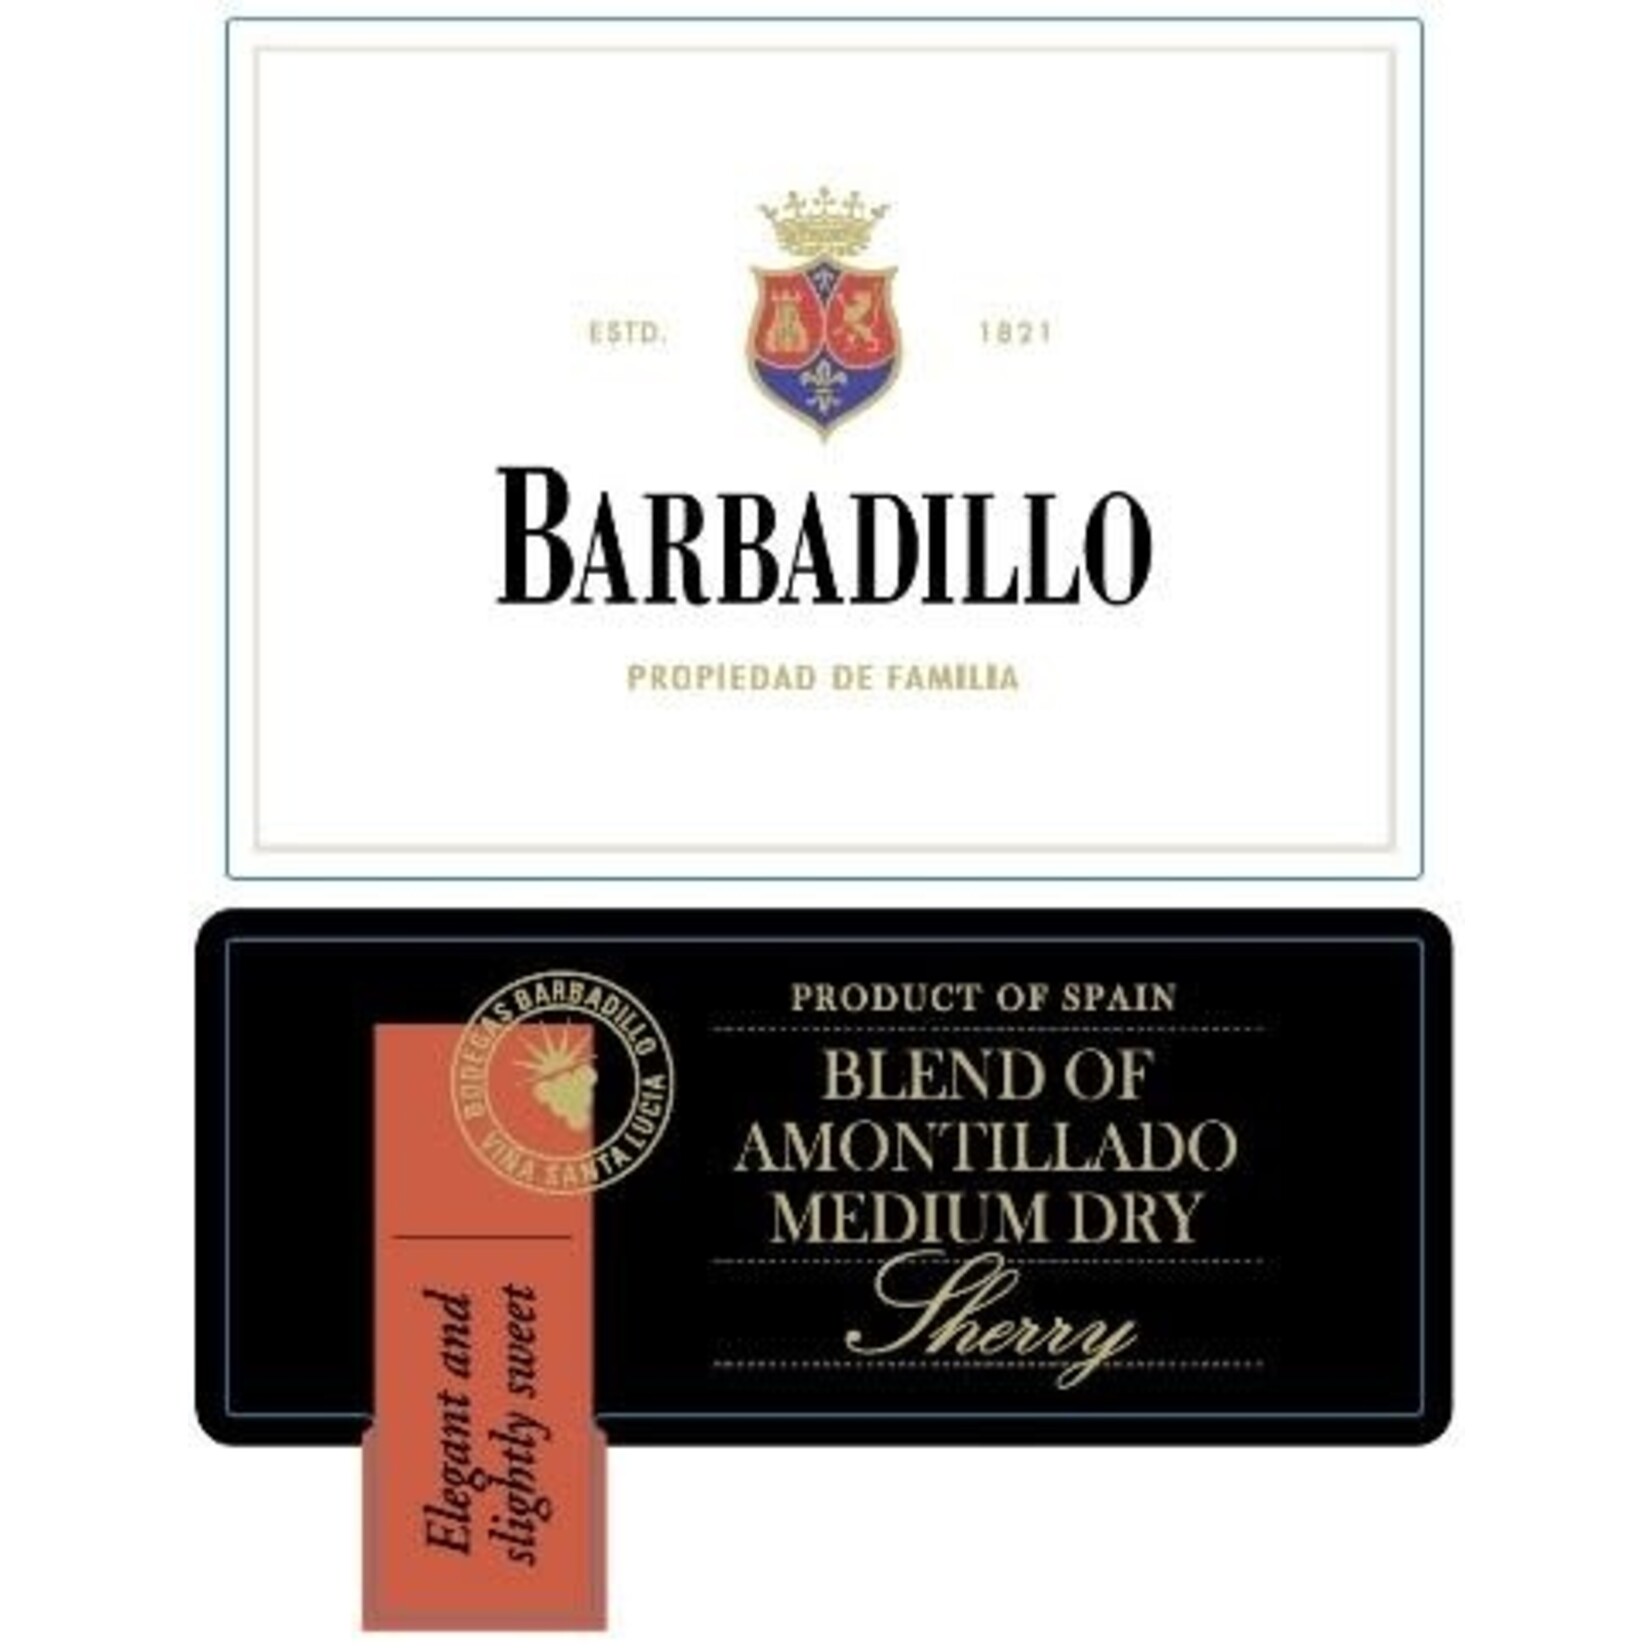 Barbadillo Barbadillo Blend of Amontillado Medium Dry Sherry  Spain